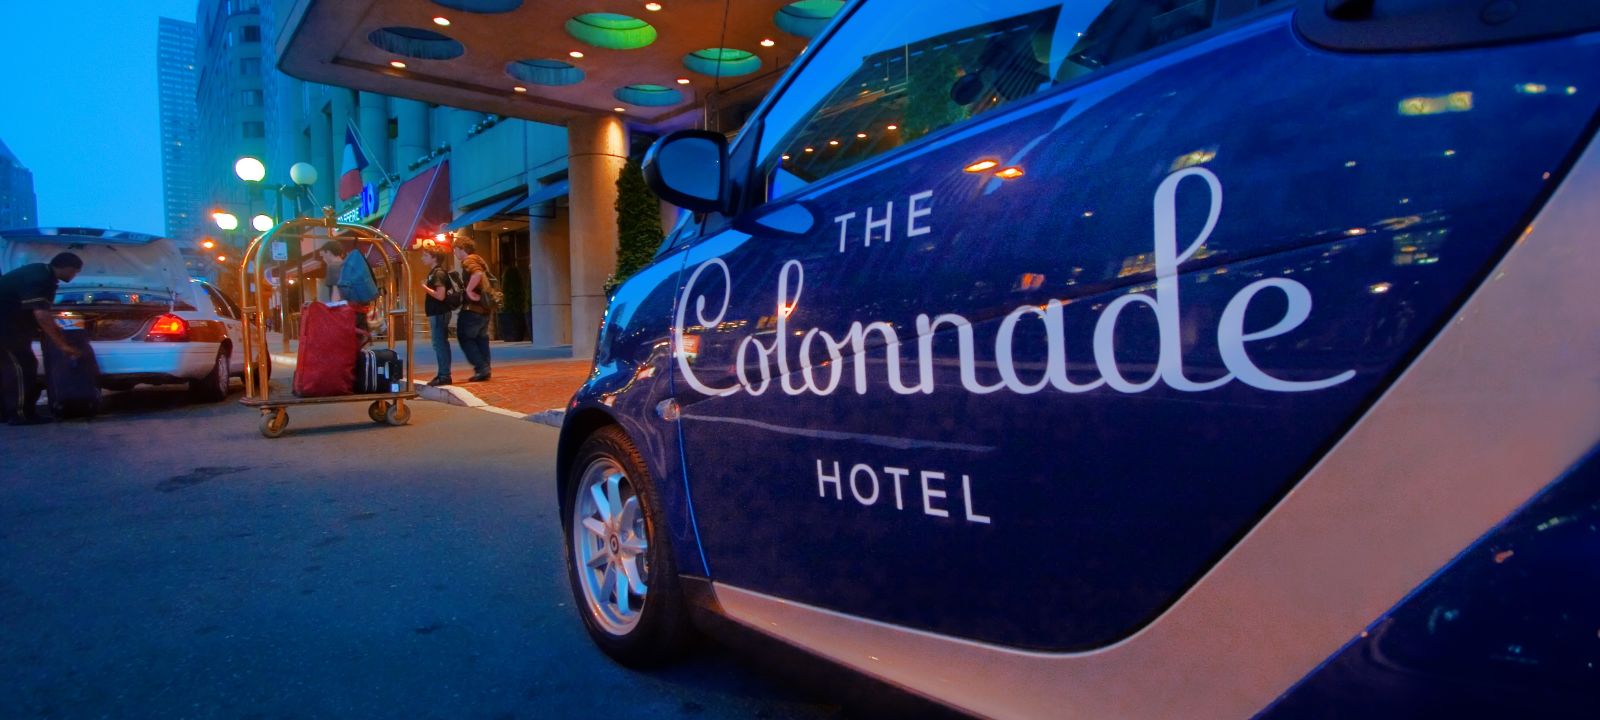 Colonnade Hotel smart car night